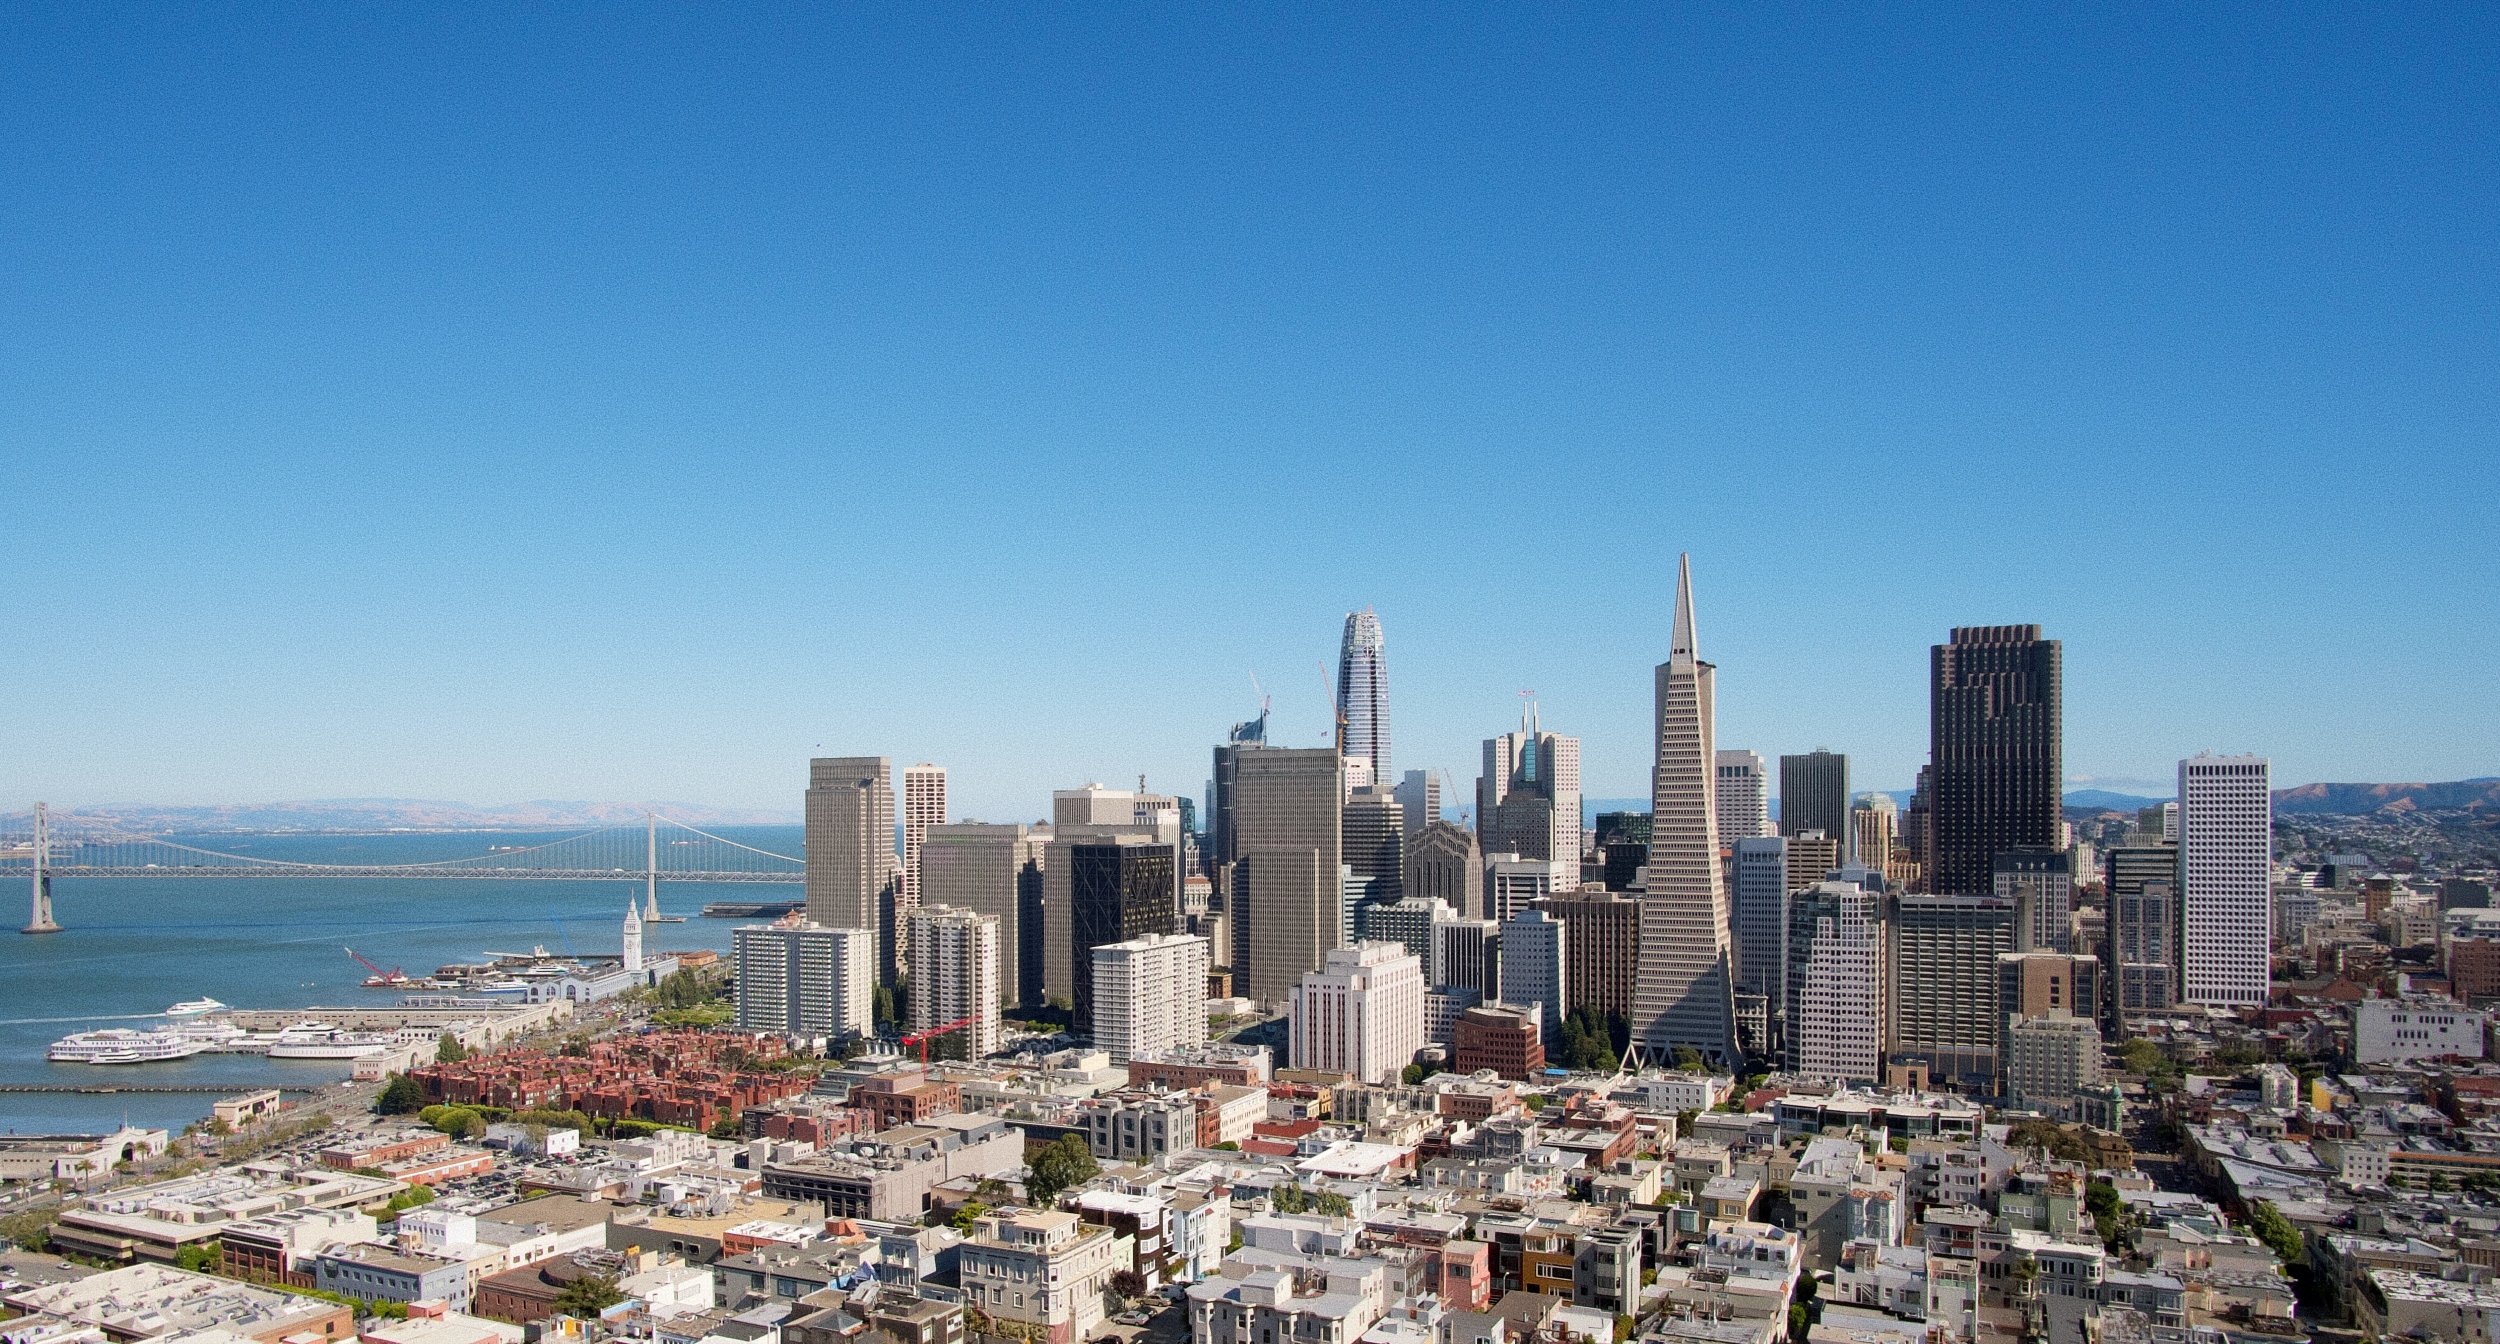 San Francisco skyline in the daytime.